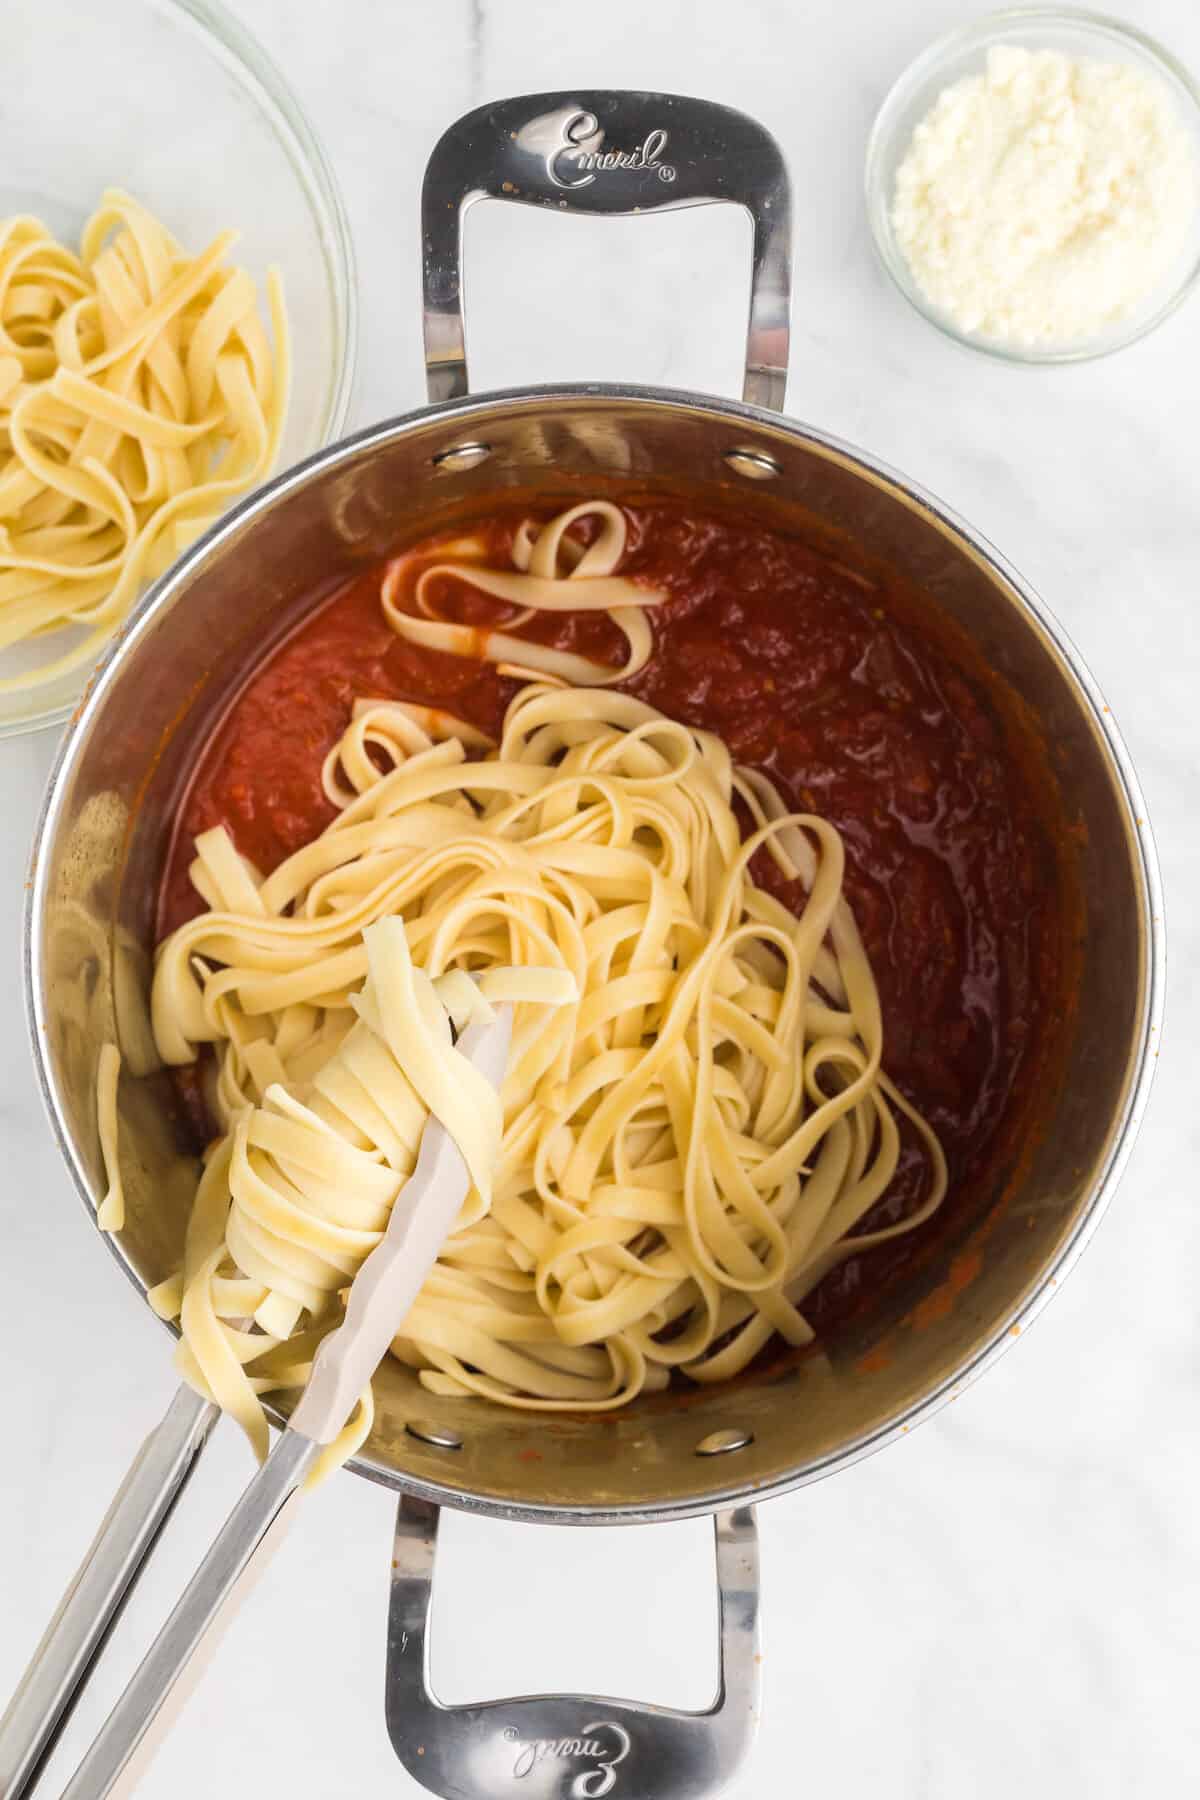 adding pasta noodles to the pasta sauce.